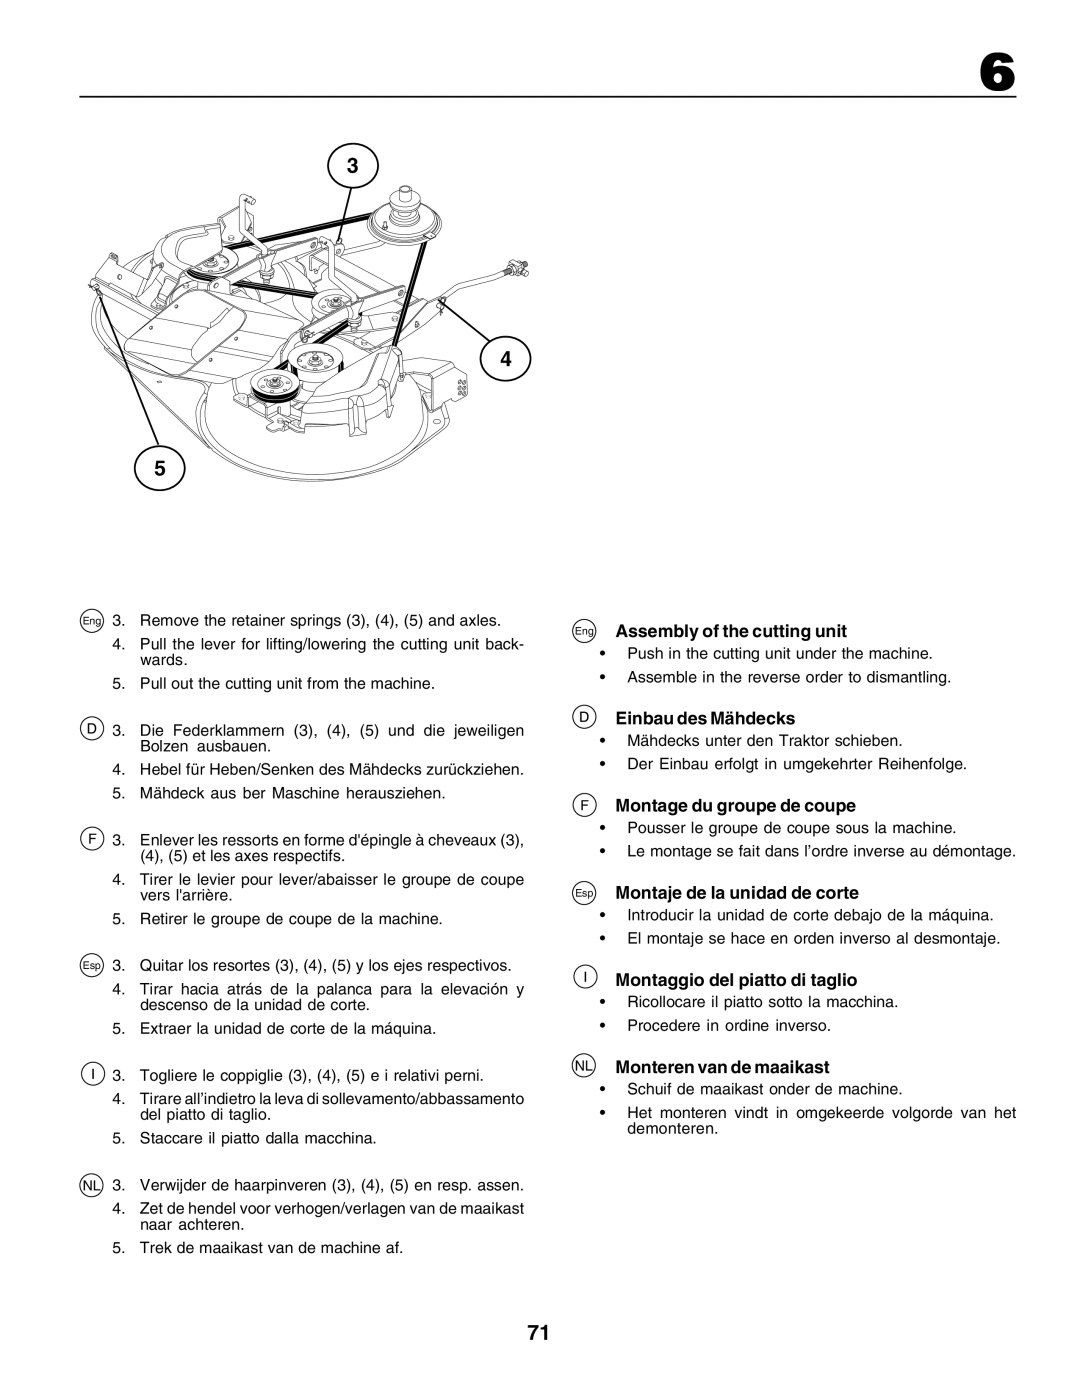 Husqvarna CT135 instruction manual Eng Assembly of the cutting unit, Einbau des Mähdecks, FMontage du groupe de coupe 